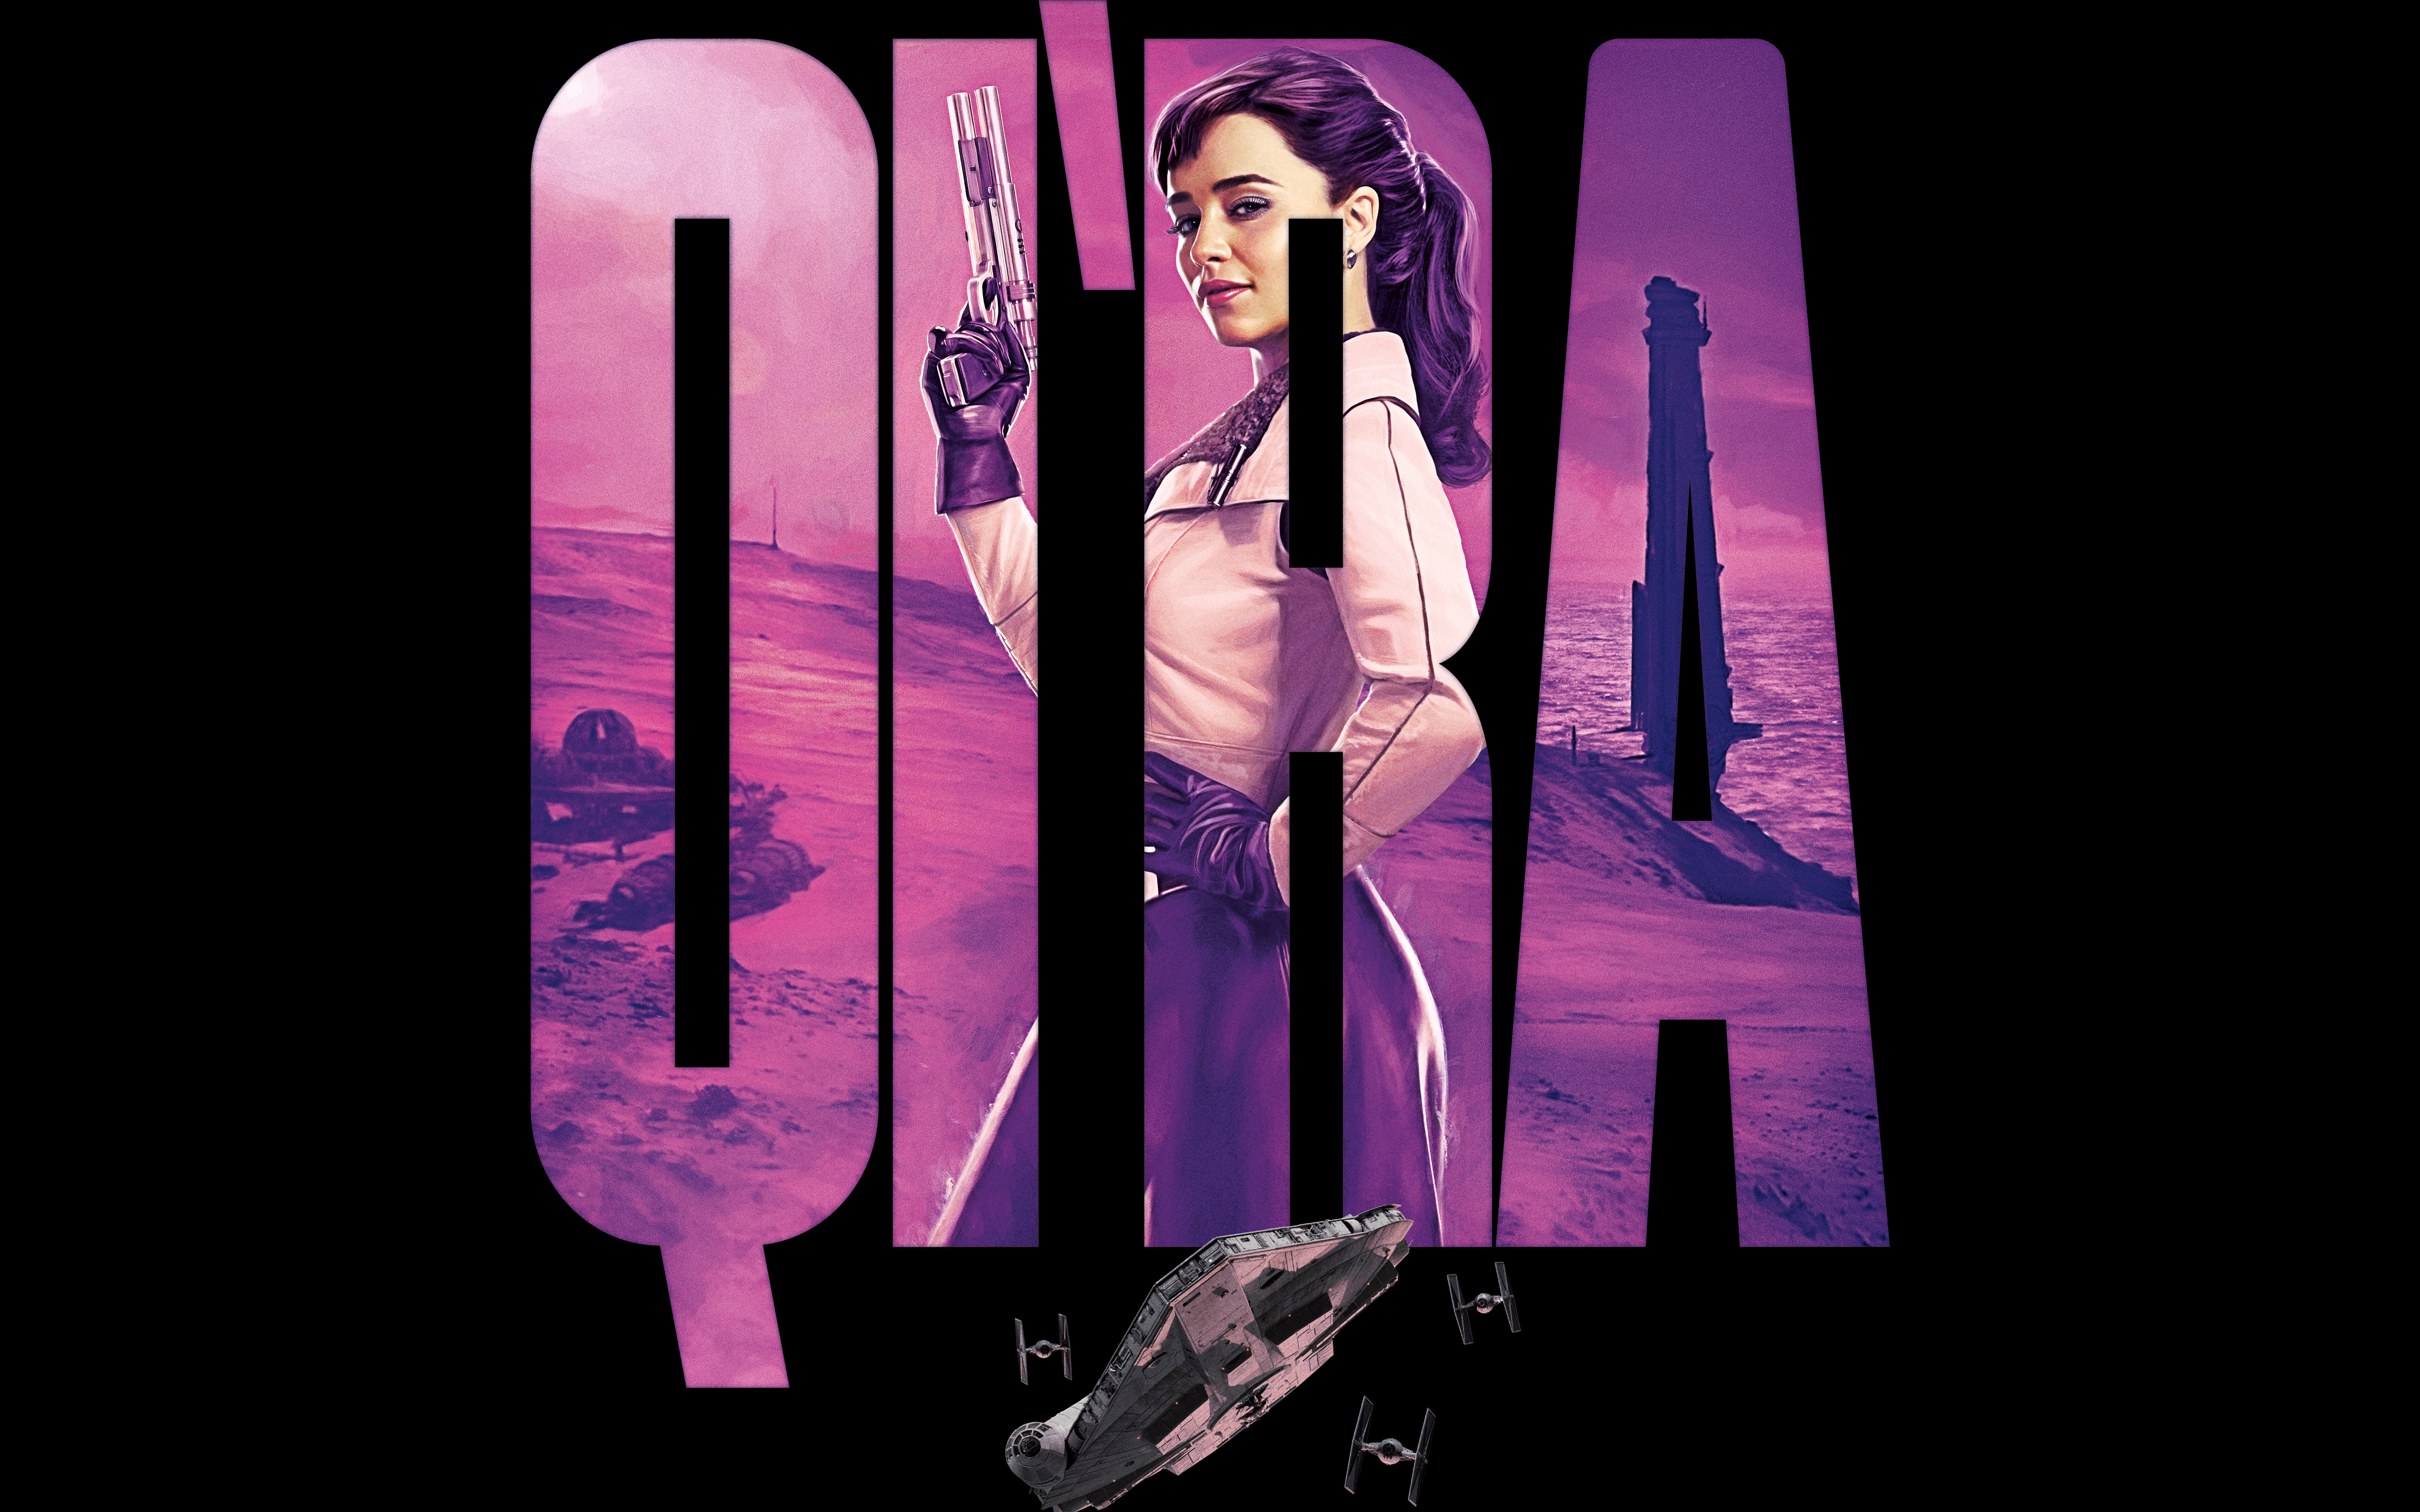 Emilia Clarke as Qira Solo A Star Wars Story 4K 8K8510916009 - Emilia Clarke as Qira Solo A Star Wars Story 4K 8K - Wars, Story, Star, Solo, Qira, Man, Emilia, Clarke